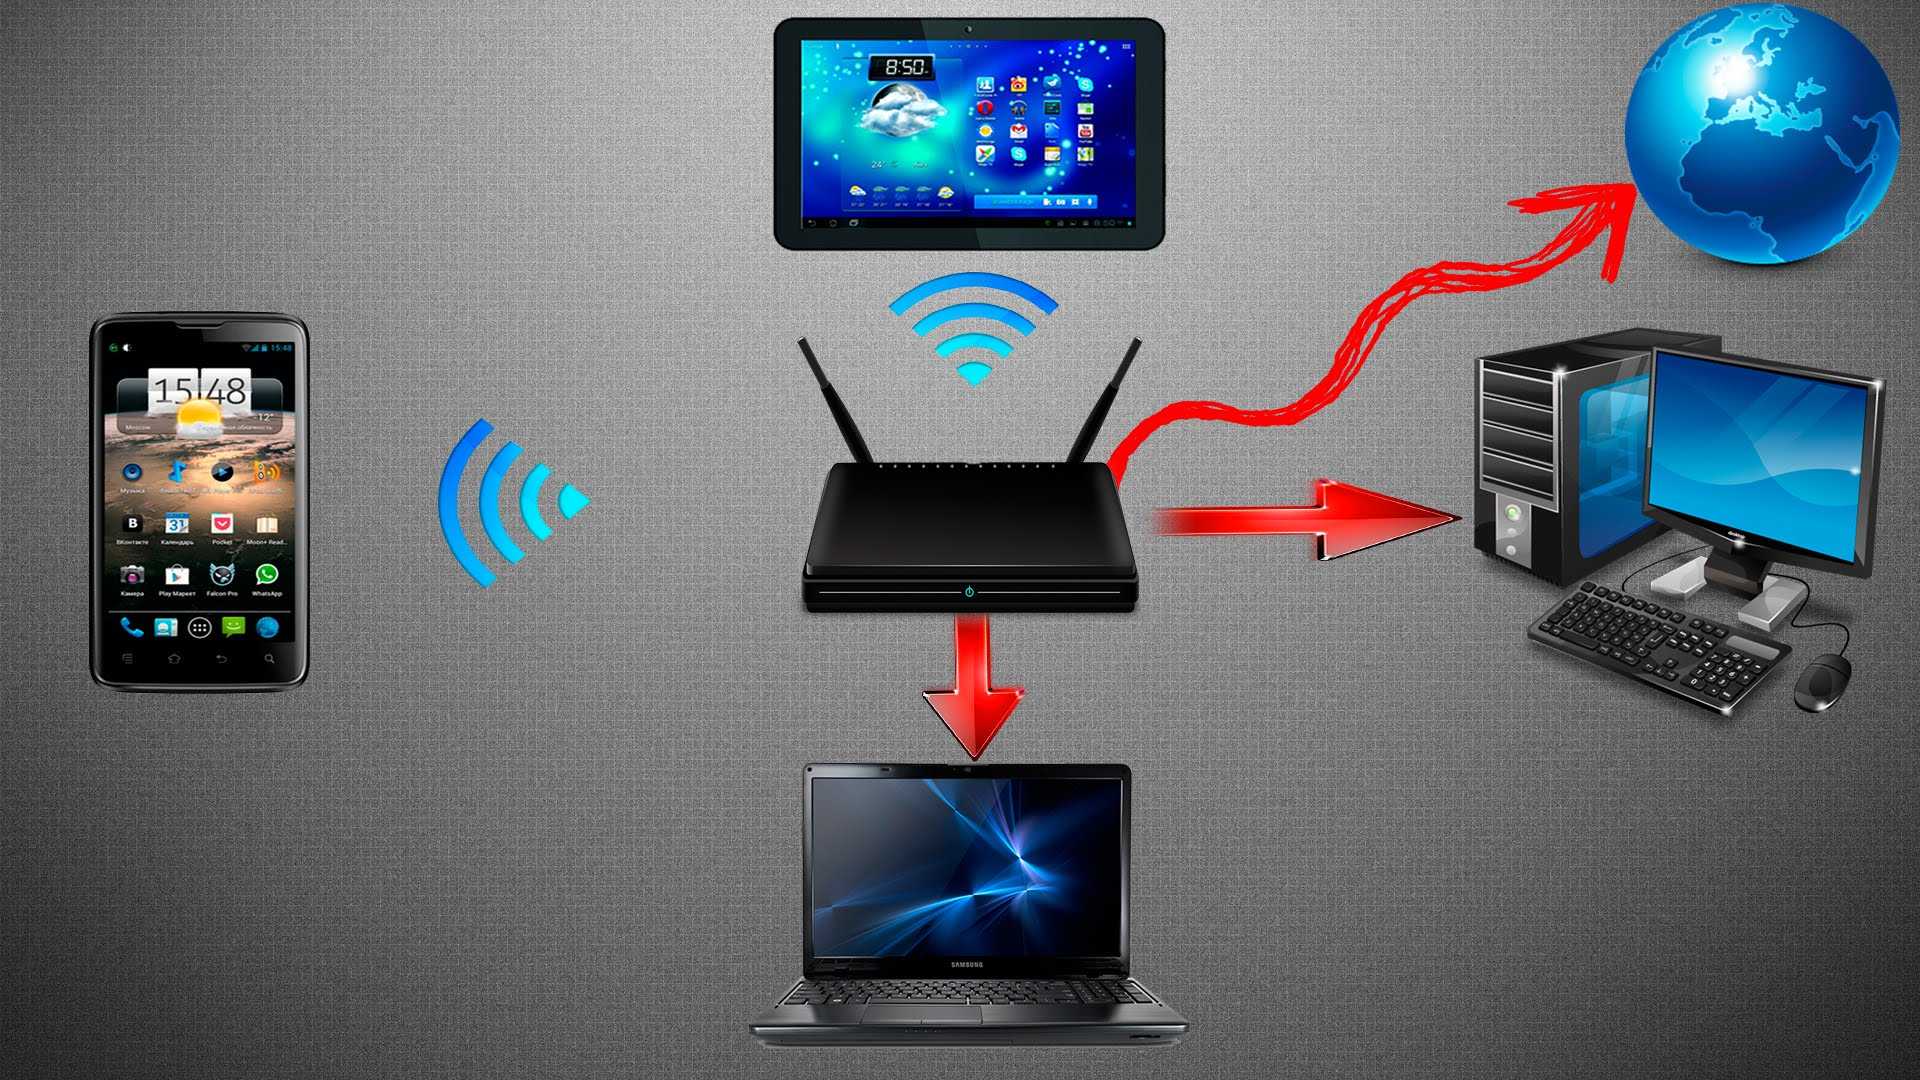 Как раздать интернет с ноутбука через wi-fi